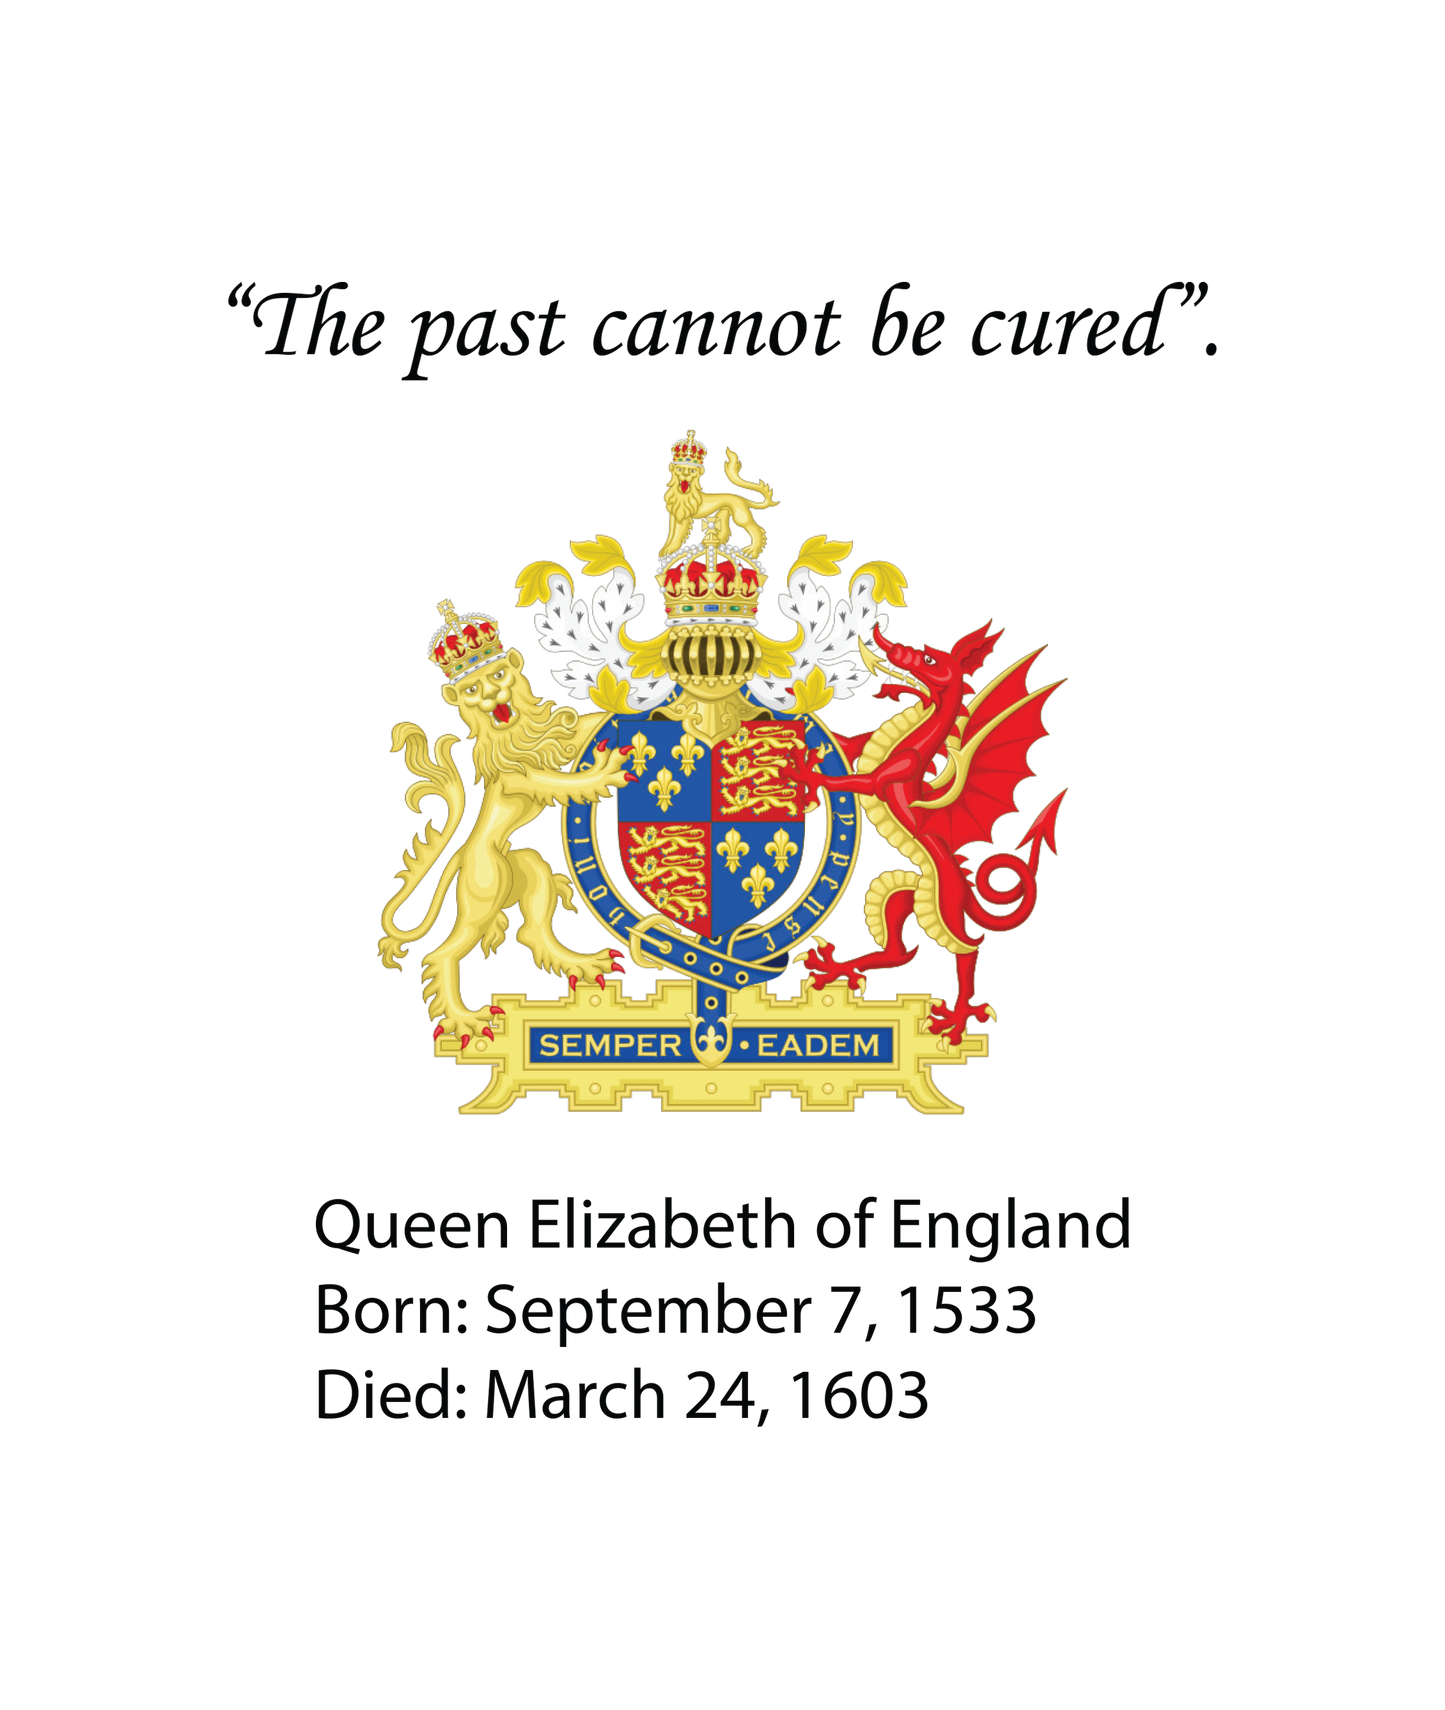 Queen Elizabeth I Unisex T-Shirt